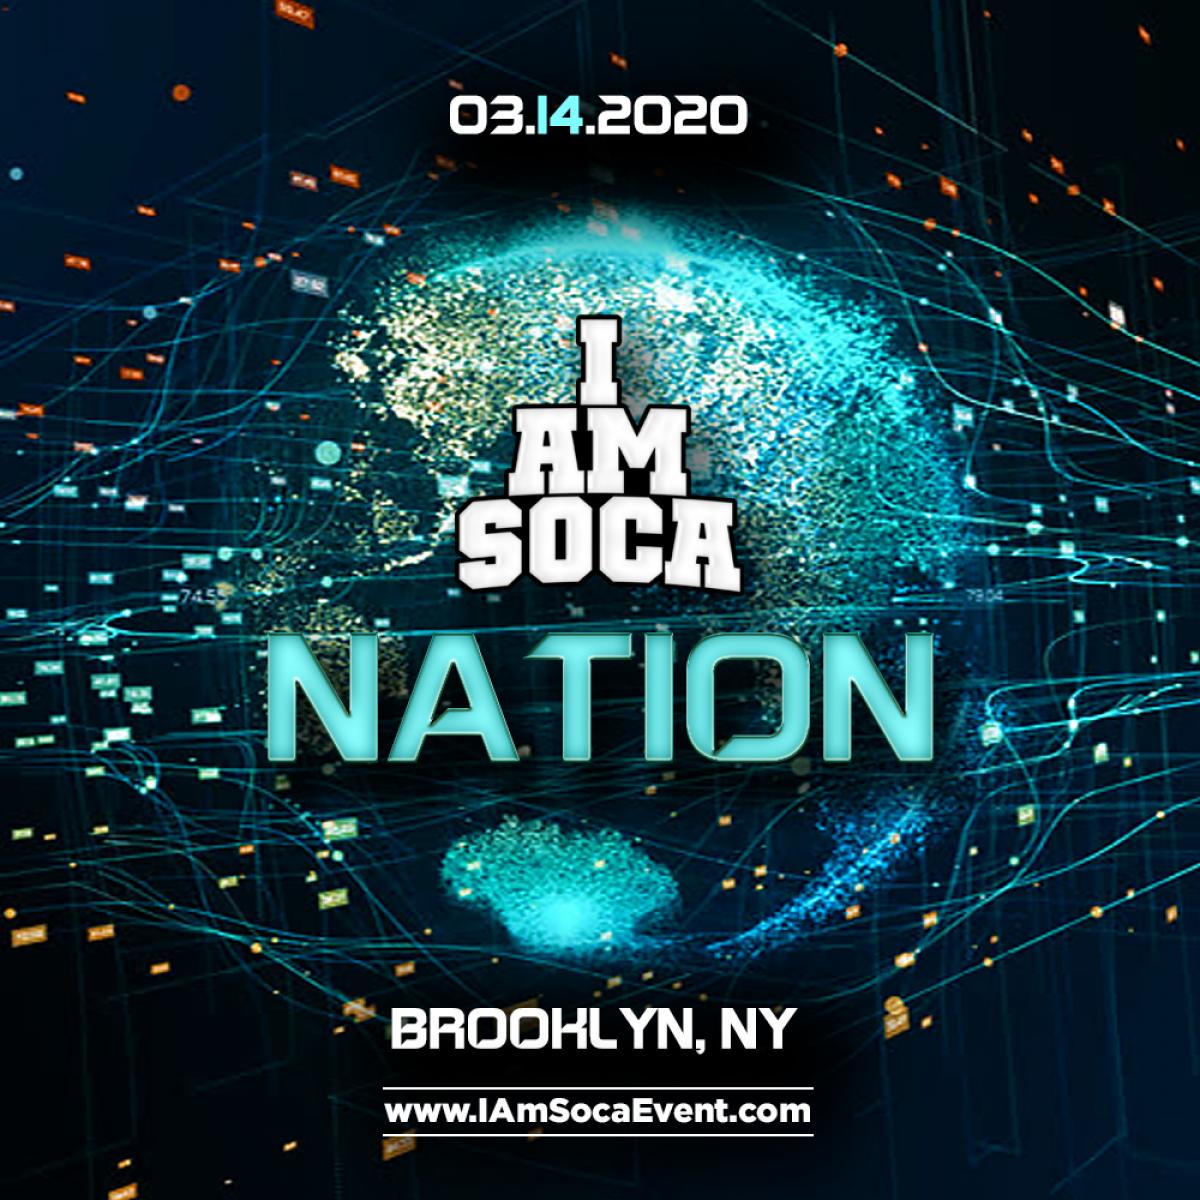 I Am Soca Nation flyer or graphic.